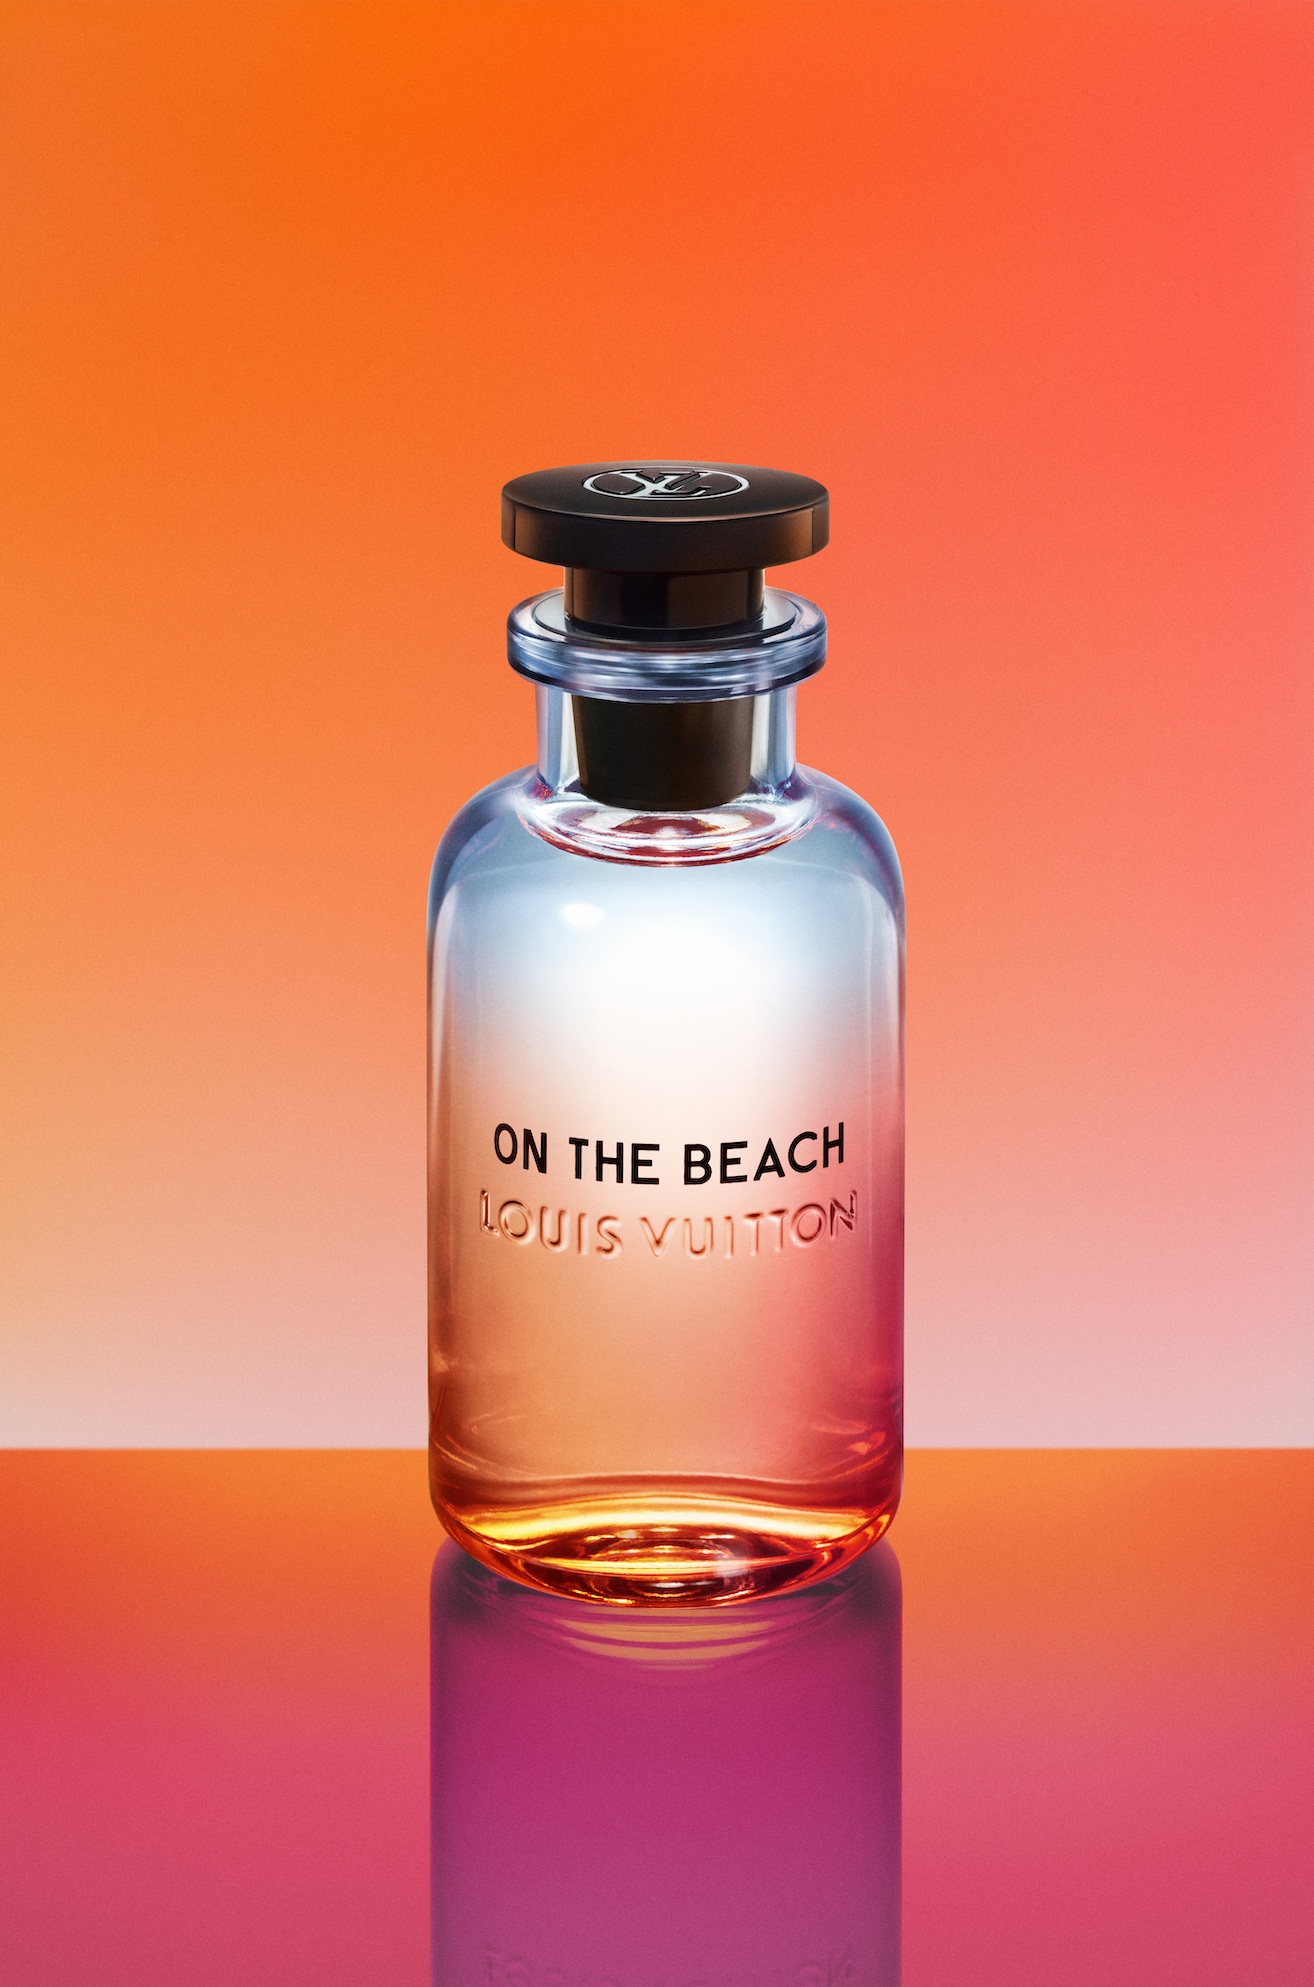 On The Beach - Louis Vuitton - Nuova Fragranza